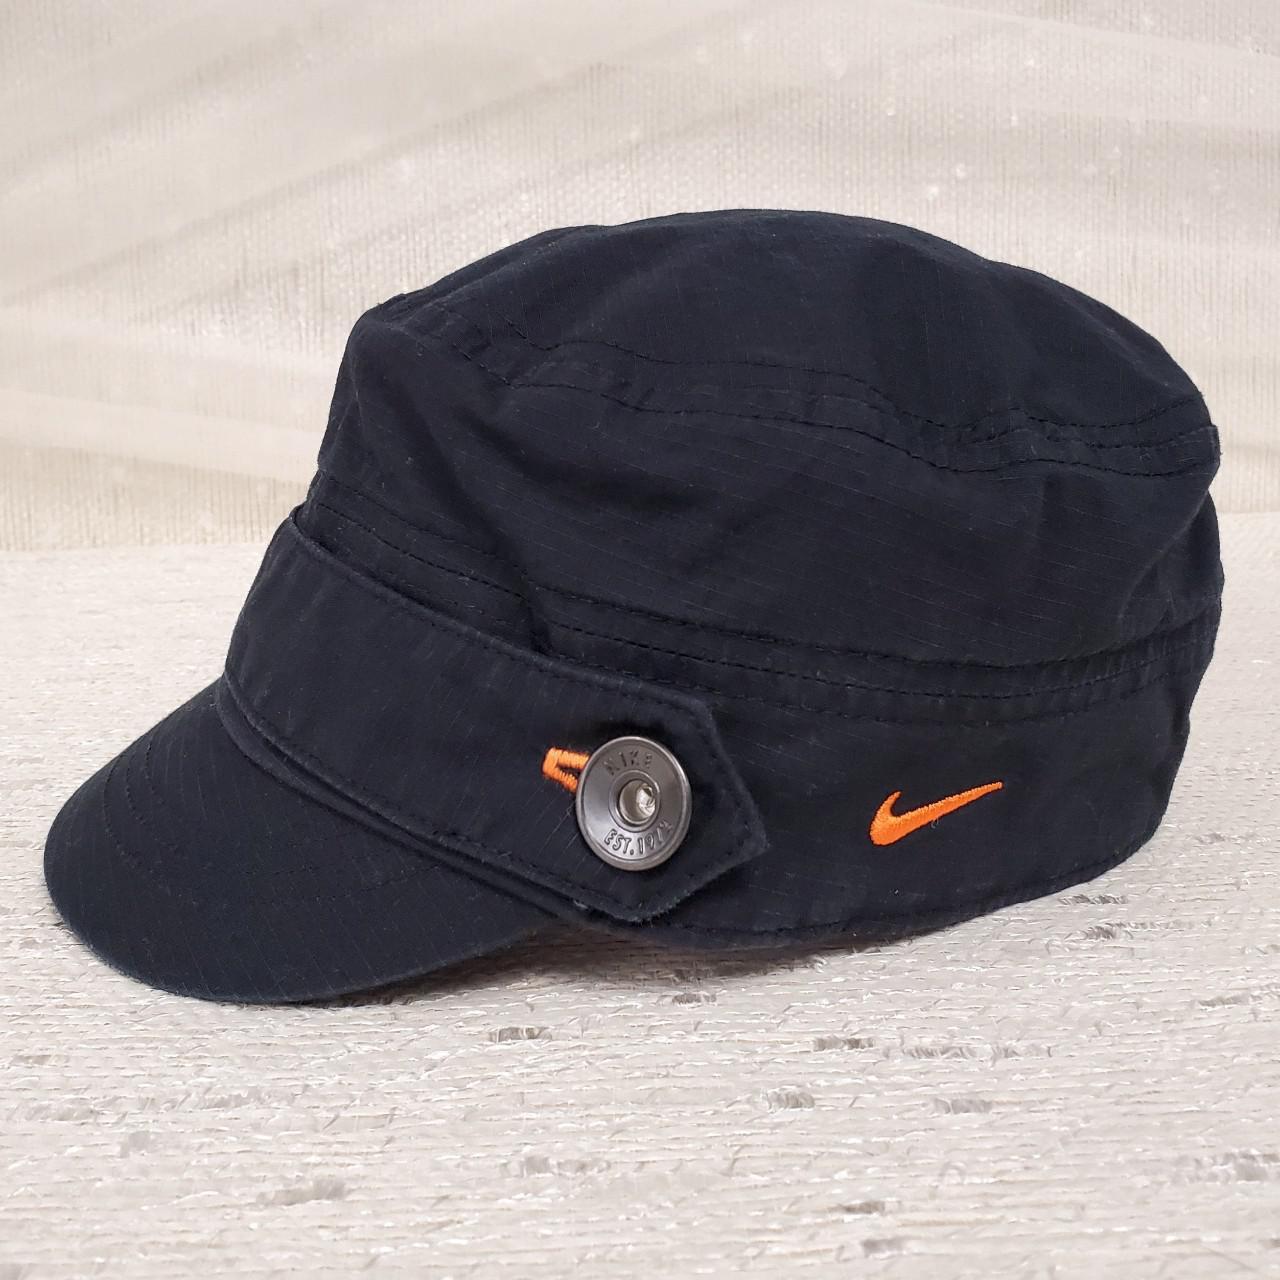 Nike Women's Black and Orange Hat